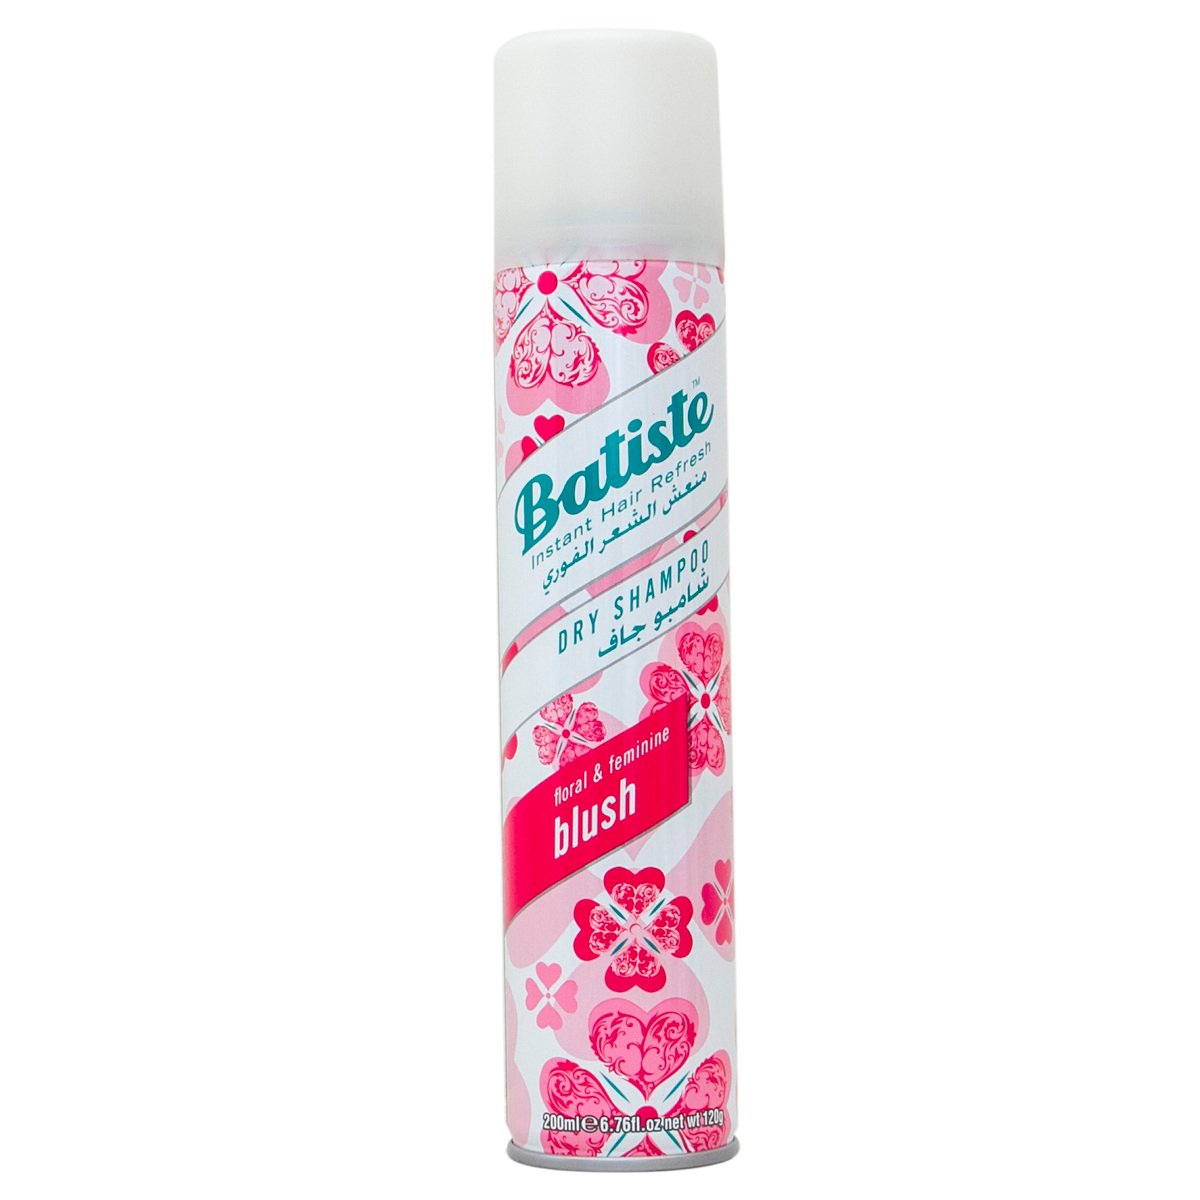 Batiste Dry Shampoo Floral & Feminine Blush 200 ml